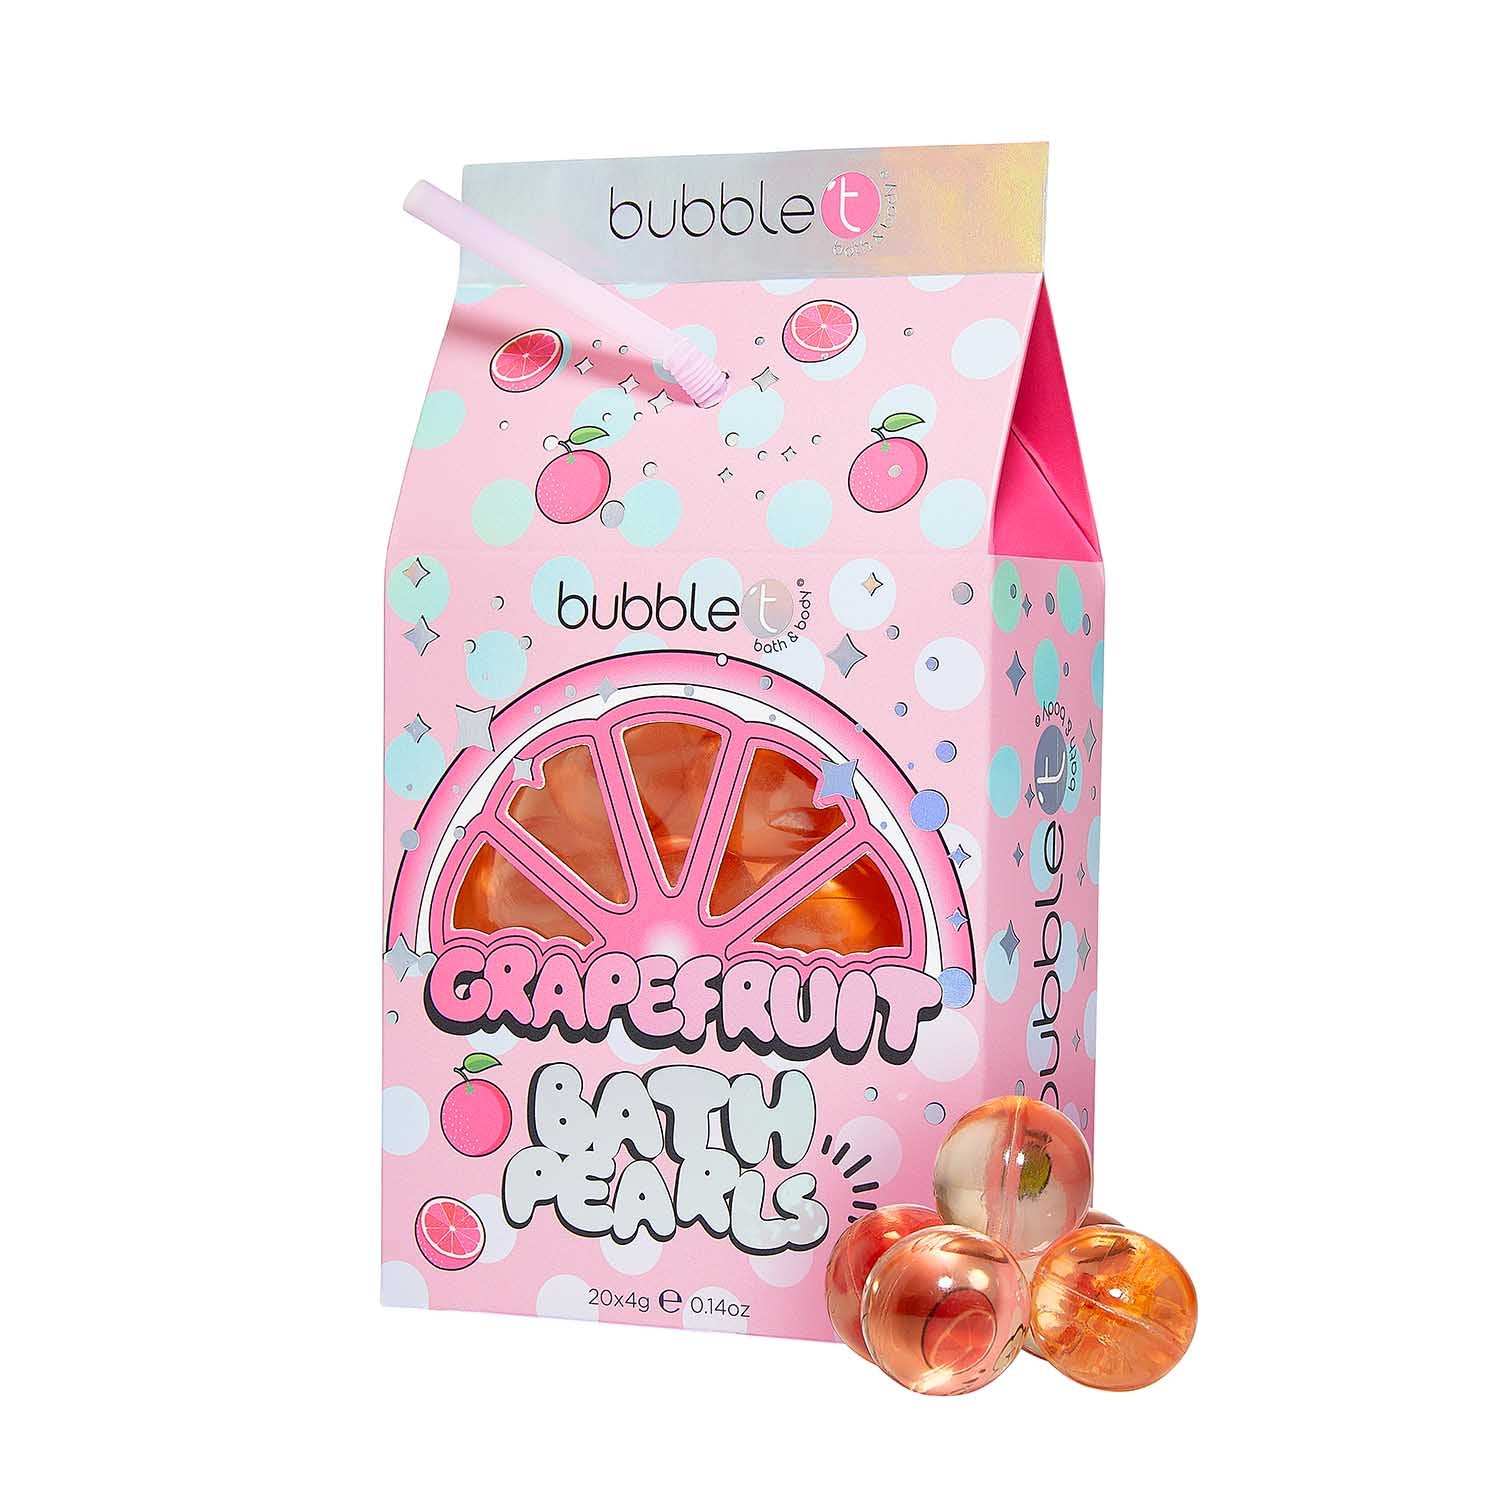 Grapefruit Melting Oil Bath Pearls (20 x 4g)